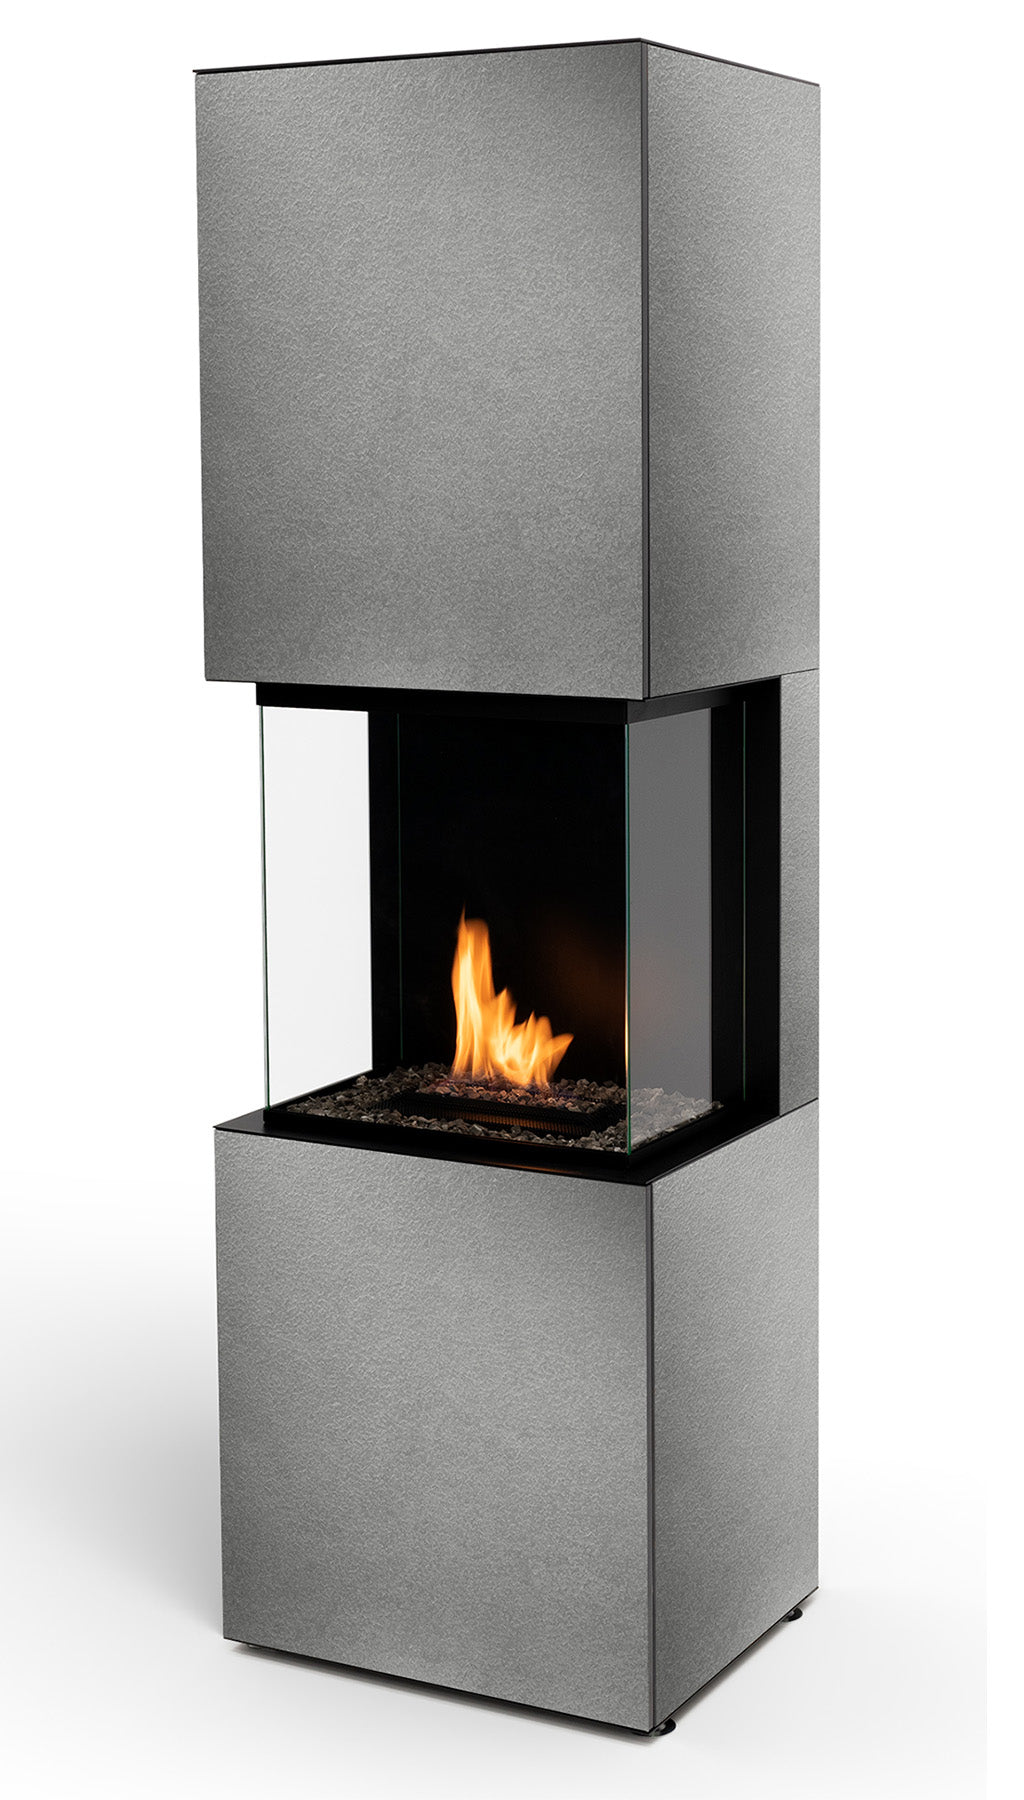 Freestanding bioethanol fireplace